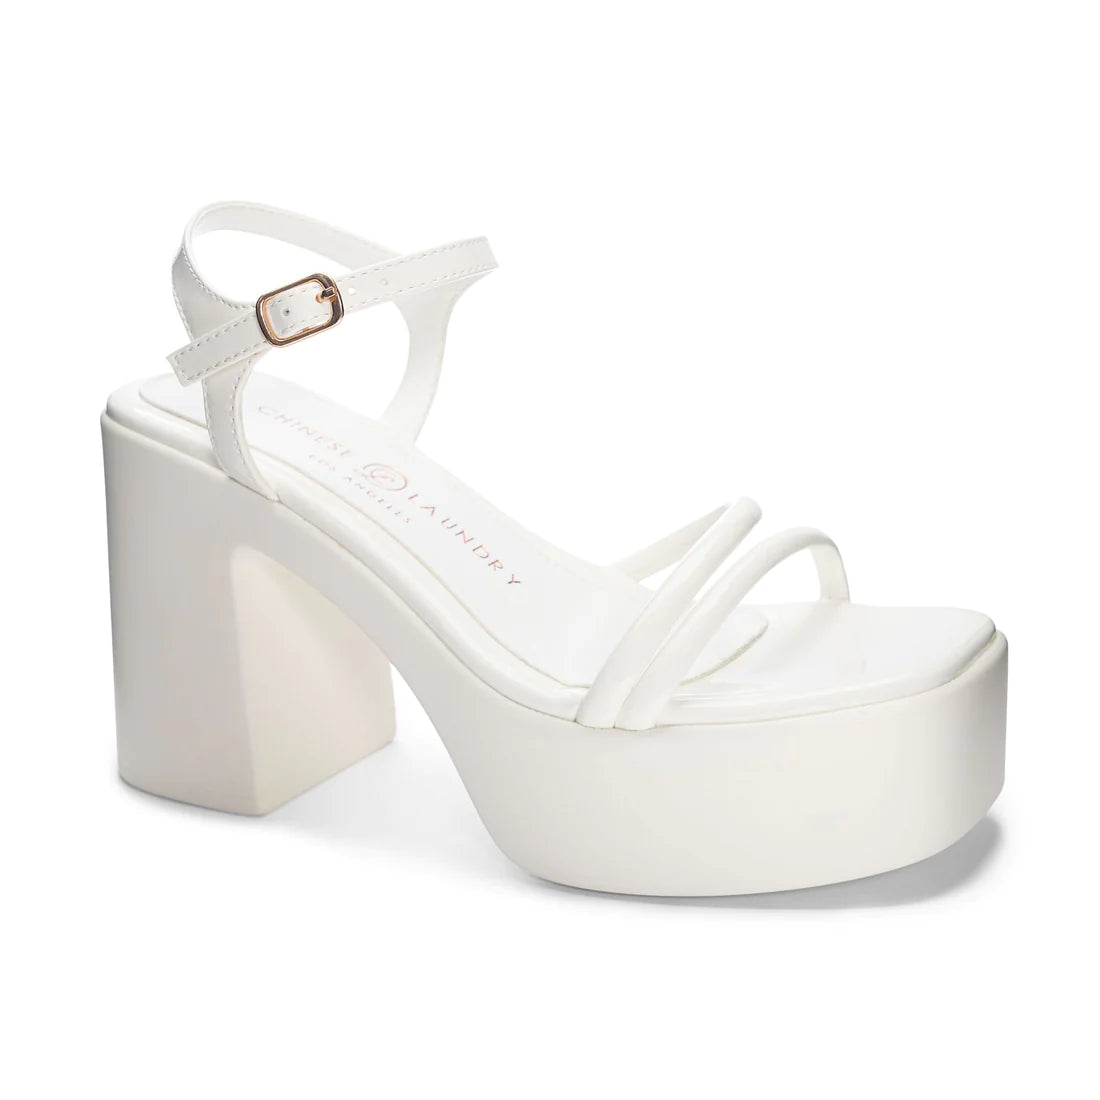 Avianna Patent White Sandal